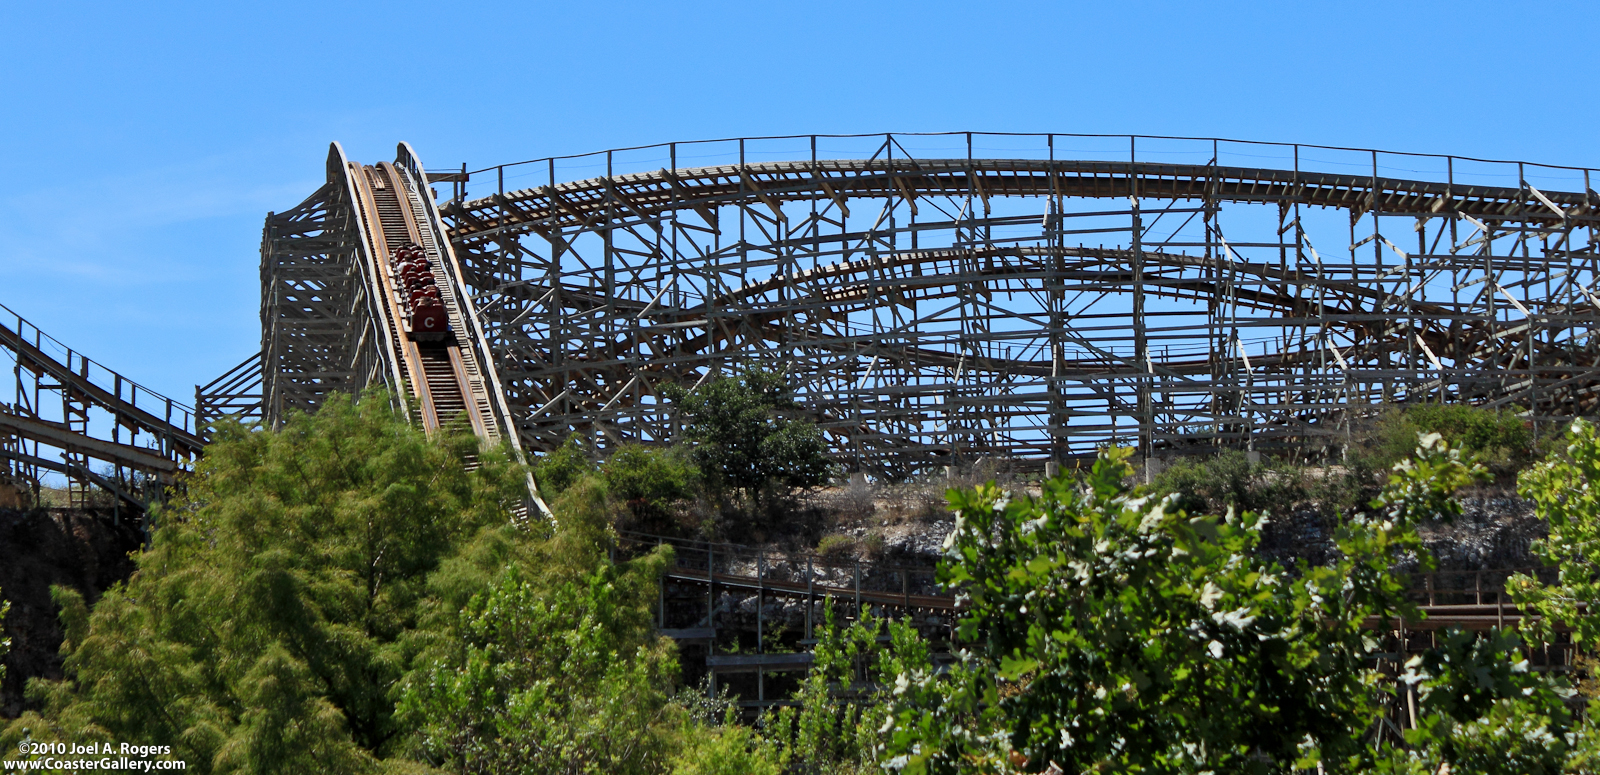 The Rattler roller coaster in Texas